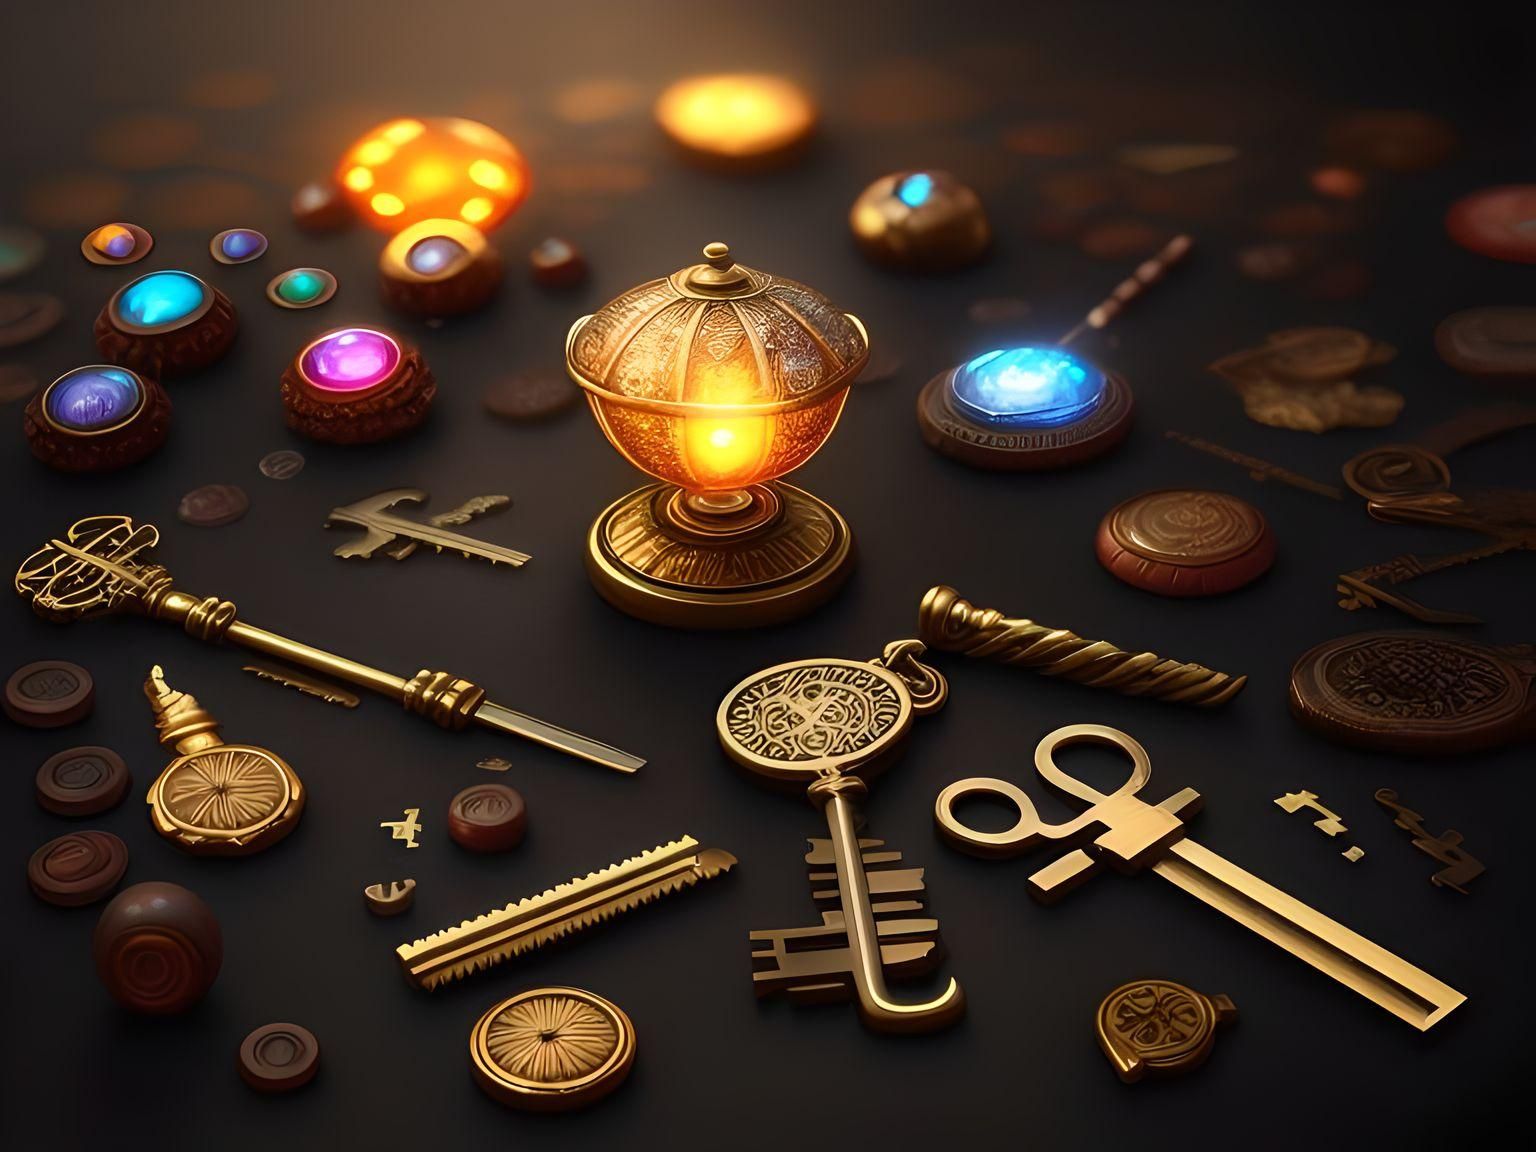 A set of 12 magic keys